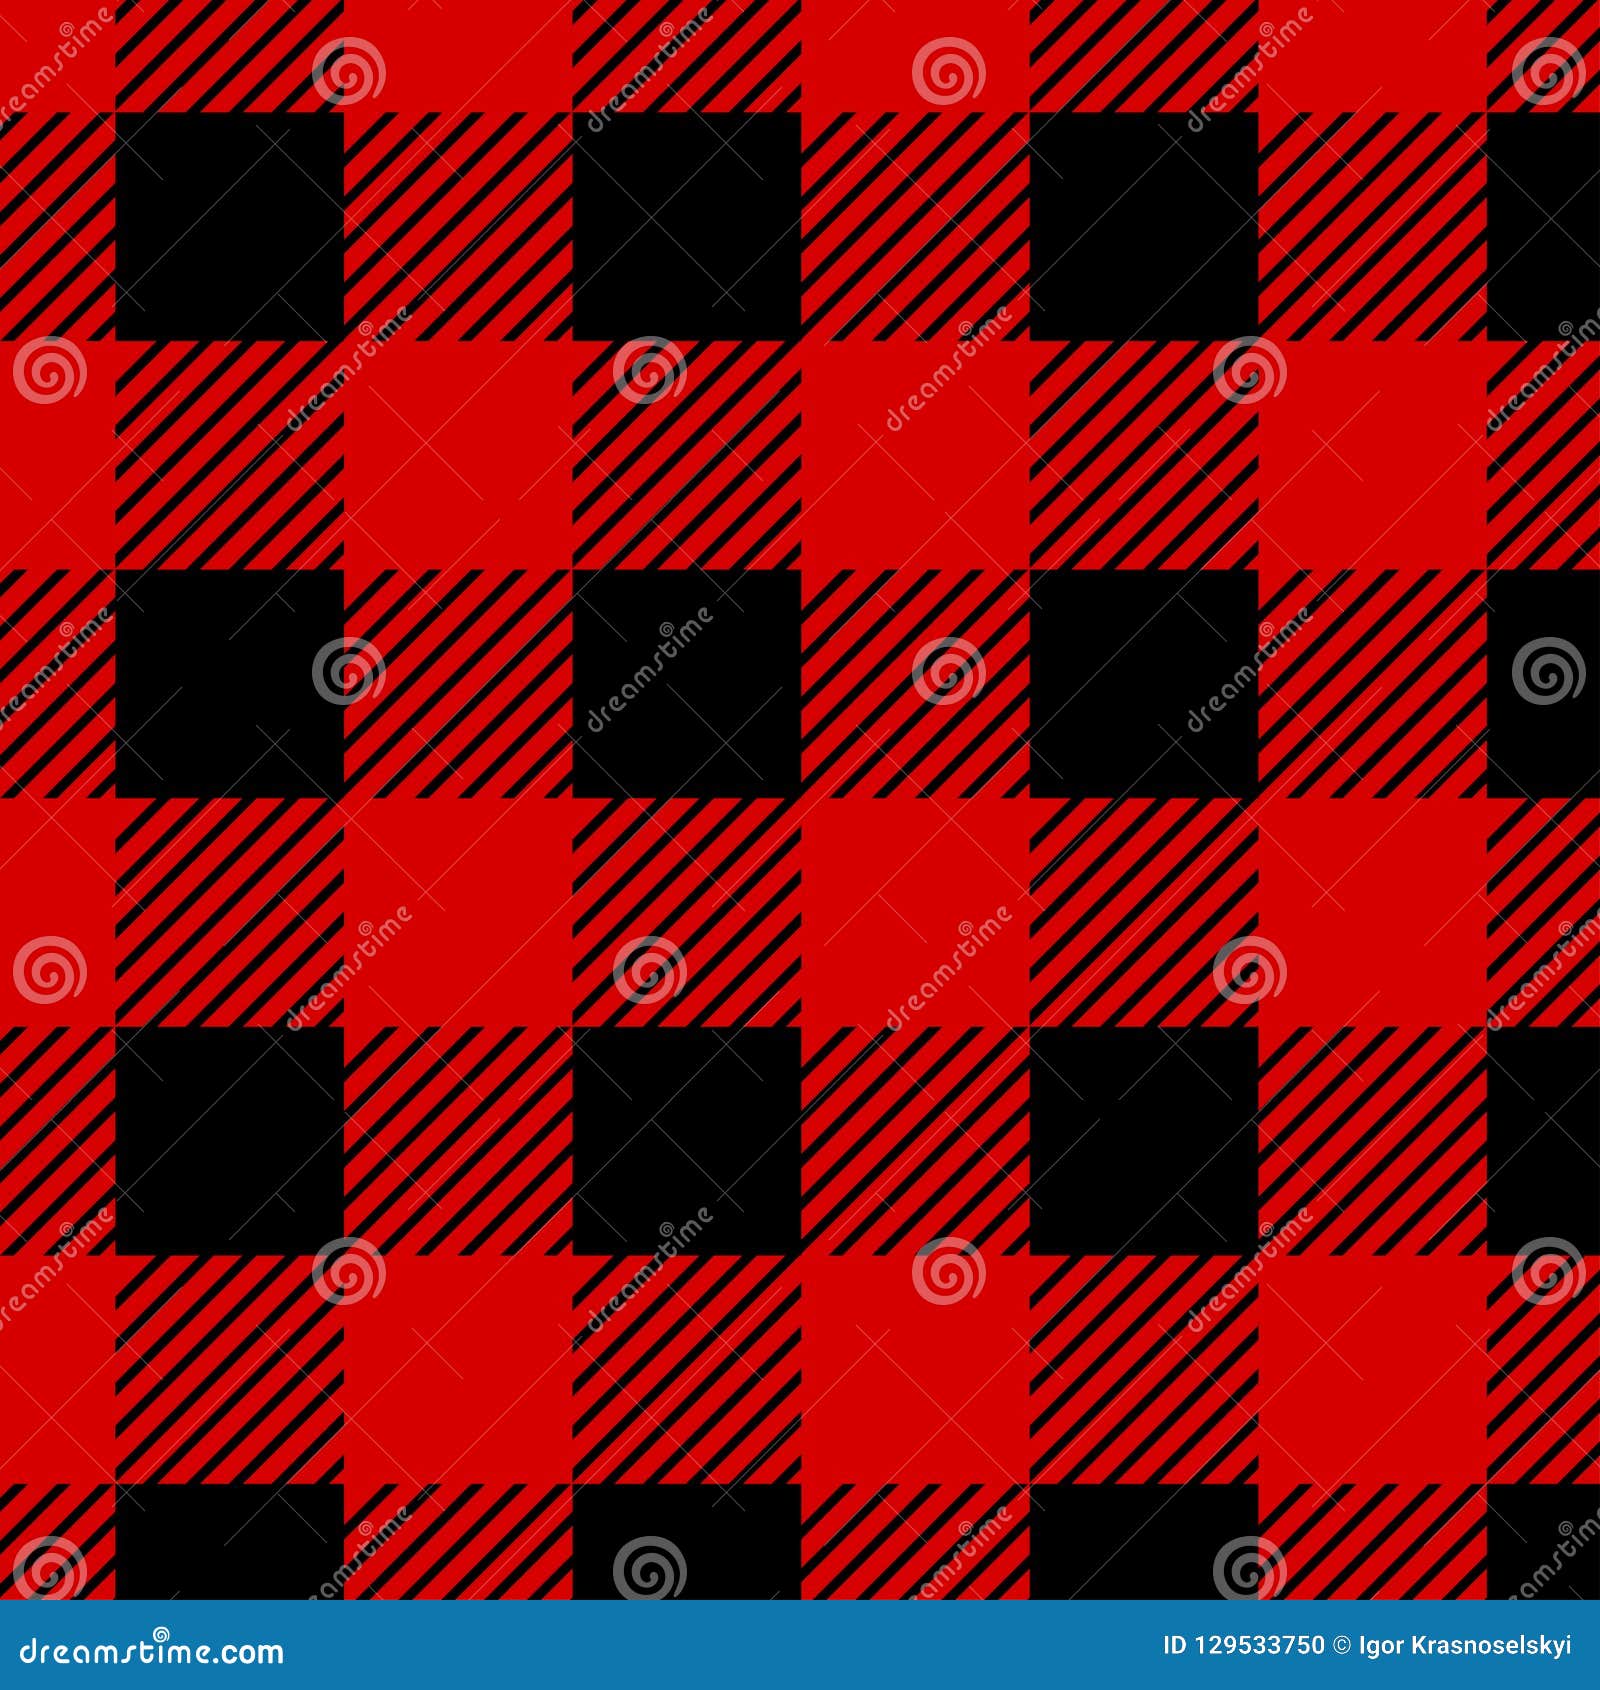 Red and black lumberjack buffalo plaid seamless Vector Image